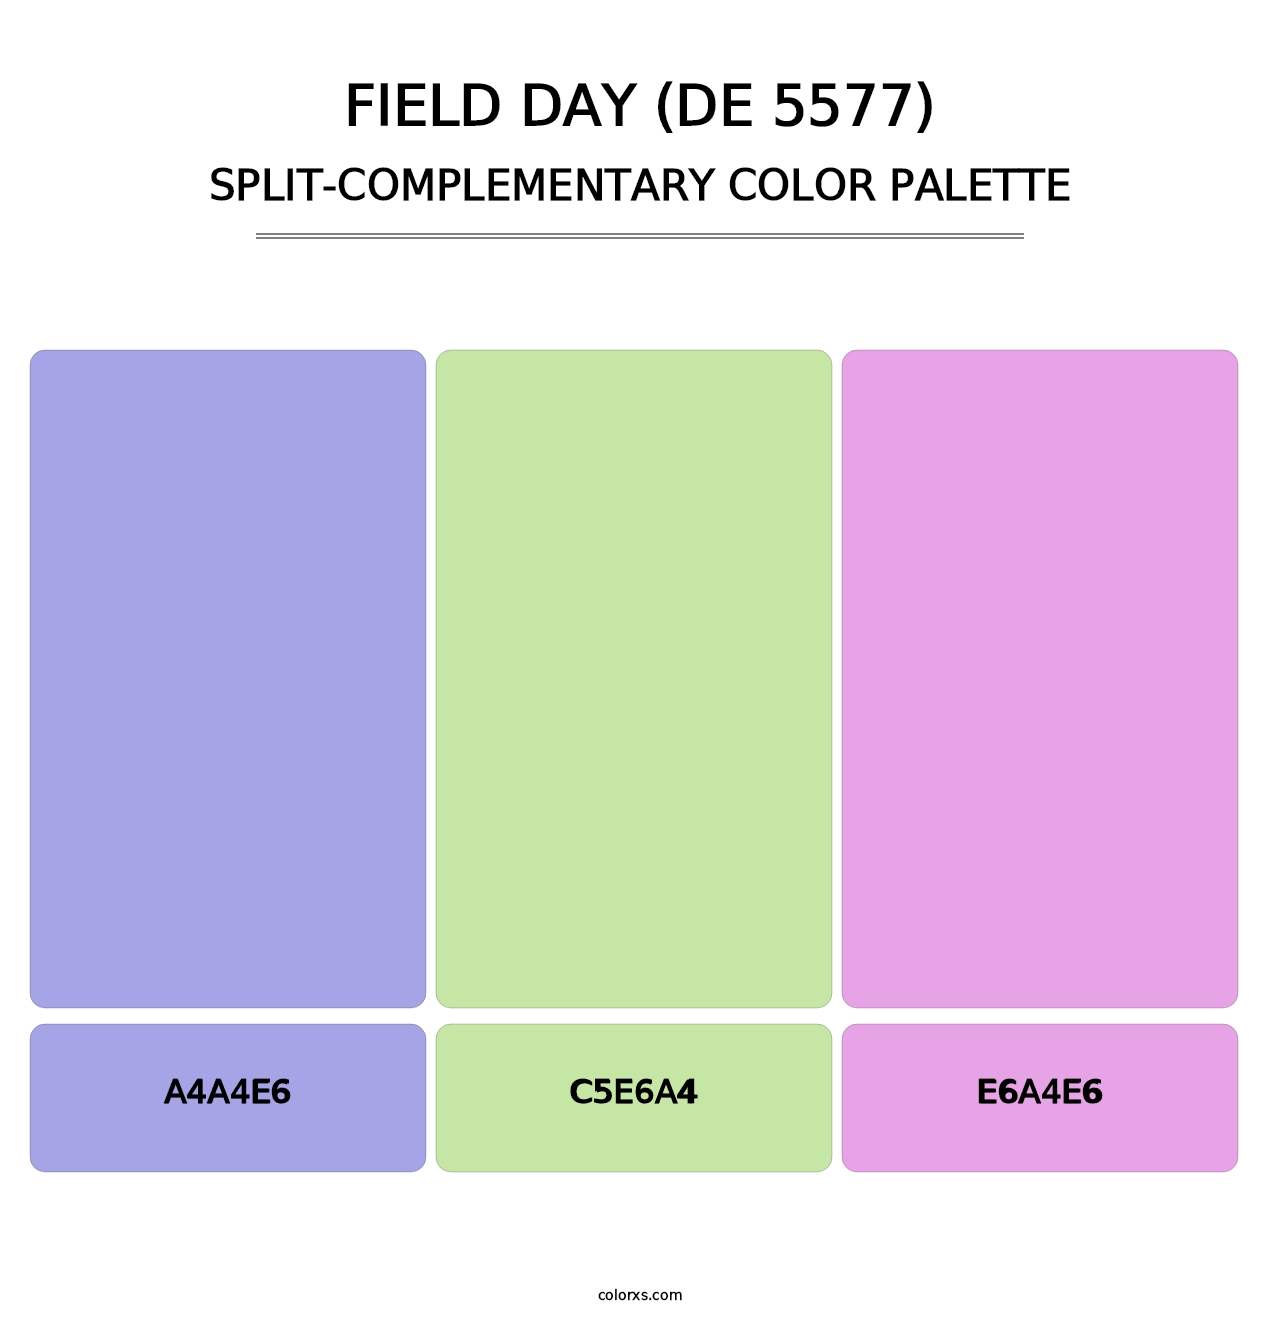 Field Day (DE 5577) - Split-Complementary Color Palette